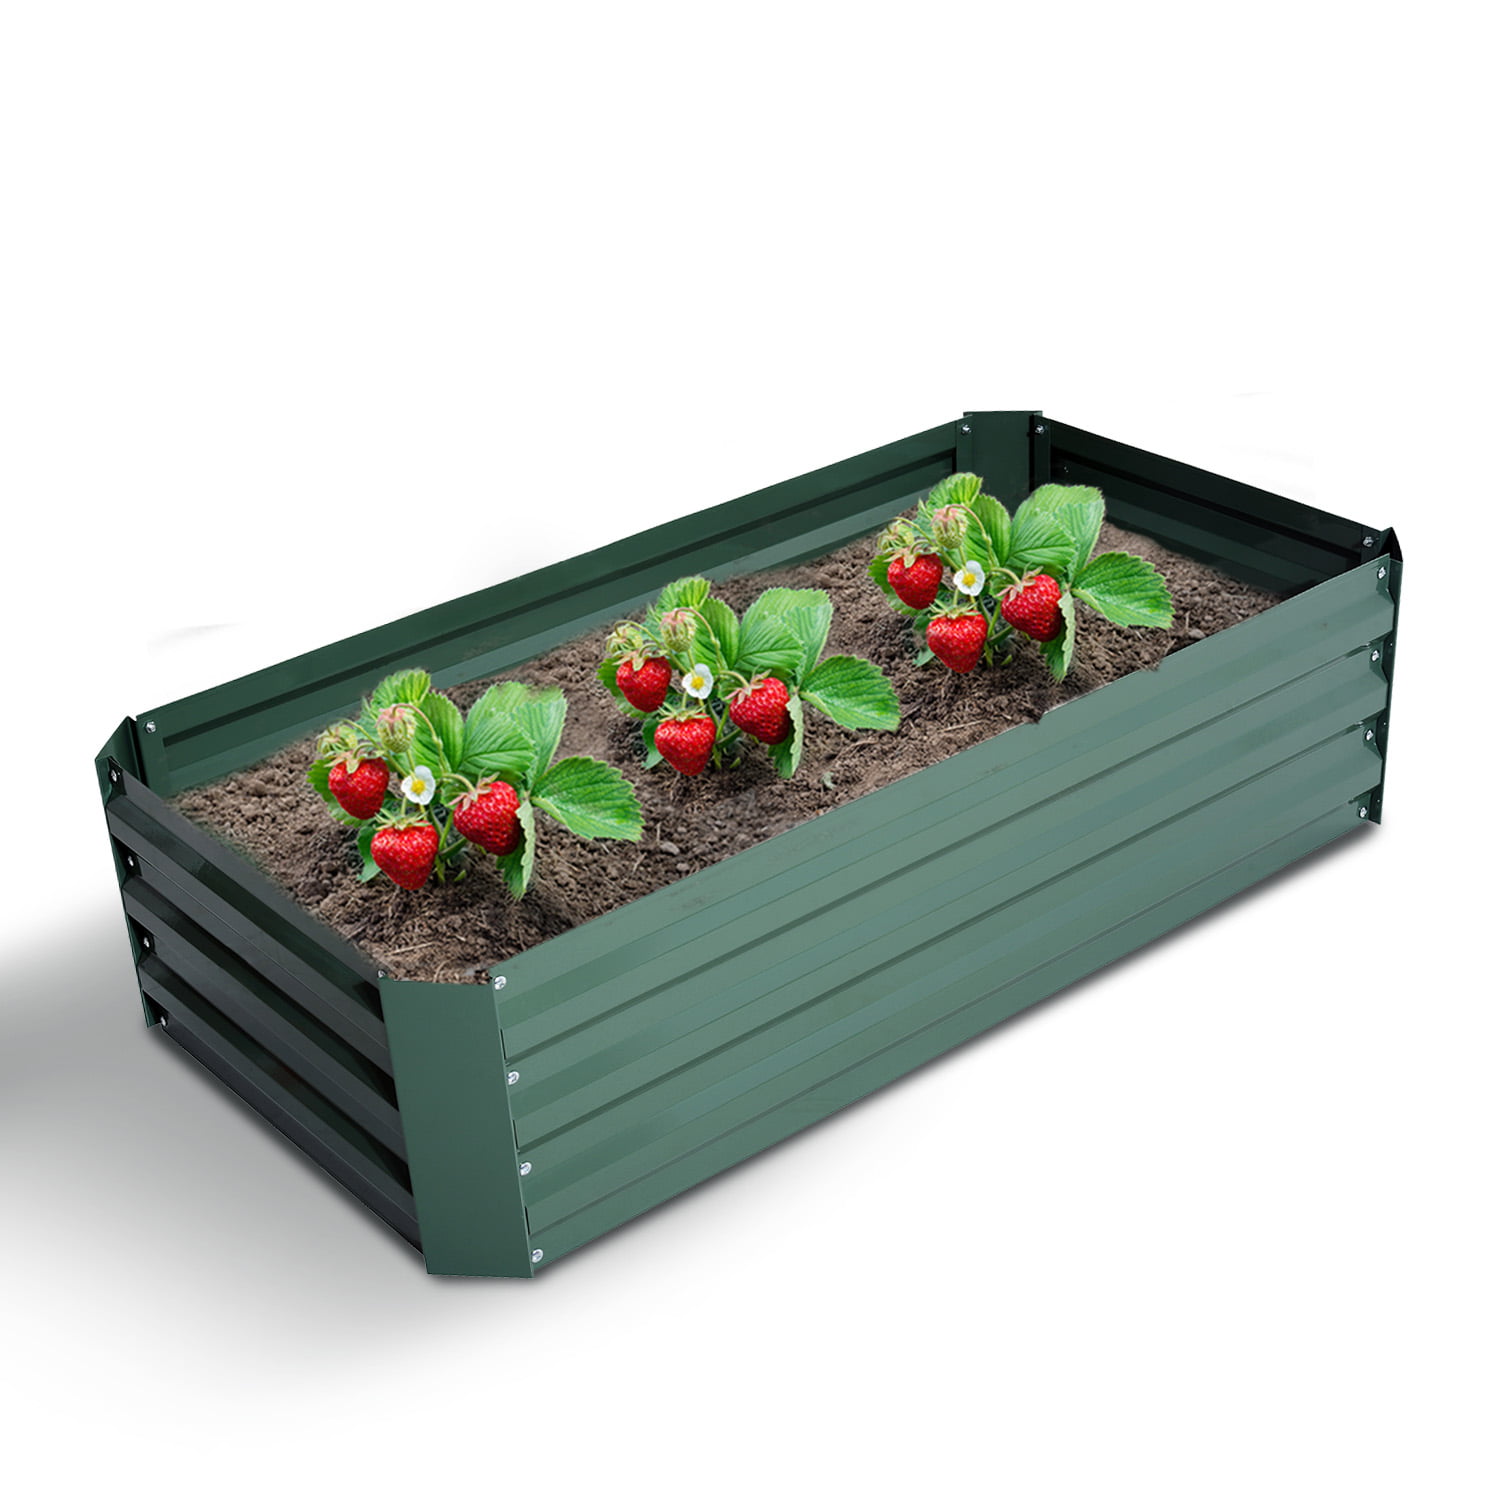 47"x24" raised garden bed planter box flower seeds growth vegetables